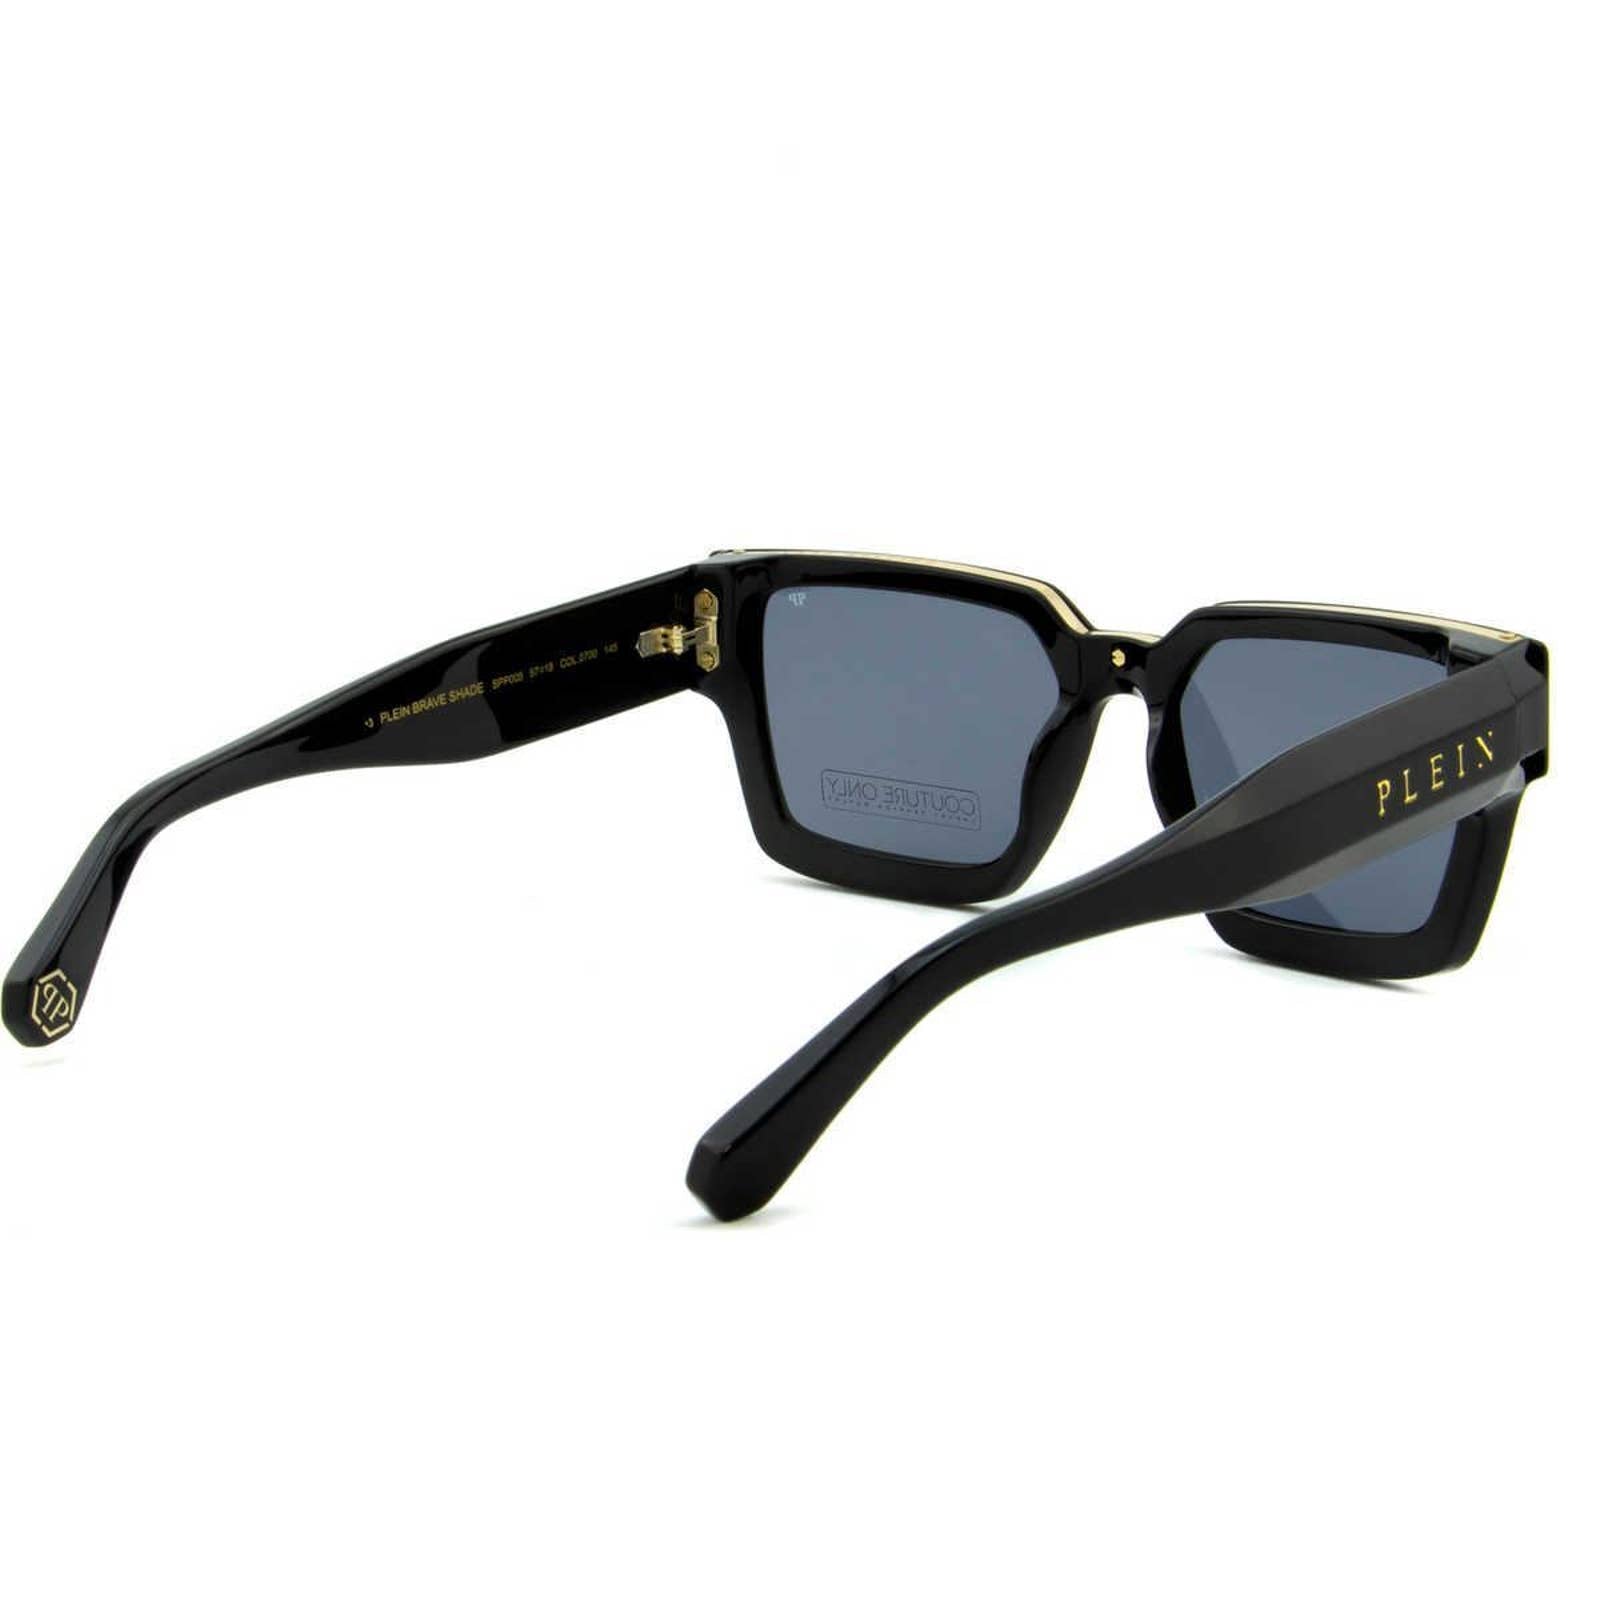 Men Black Square Sunglasses SPP005M-0700 Black & Gray